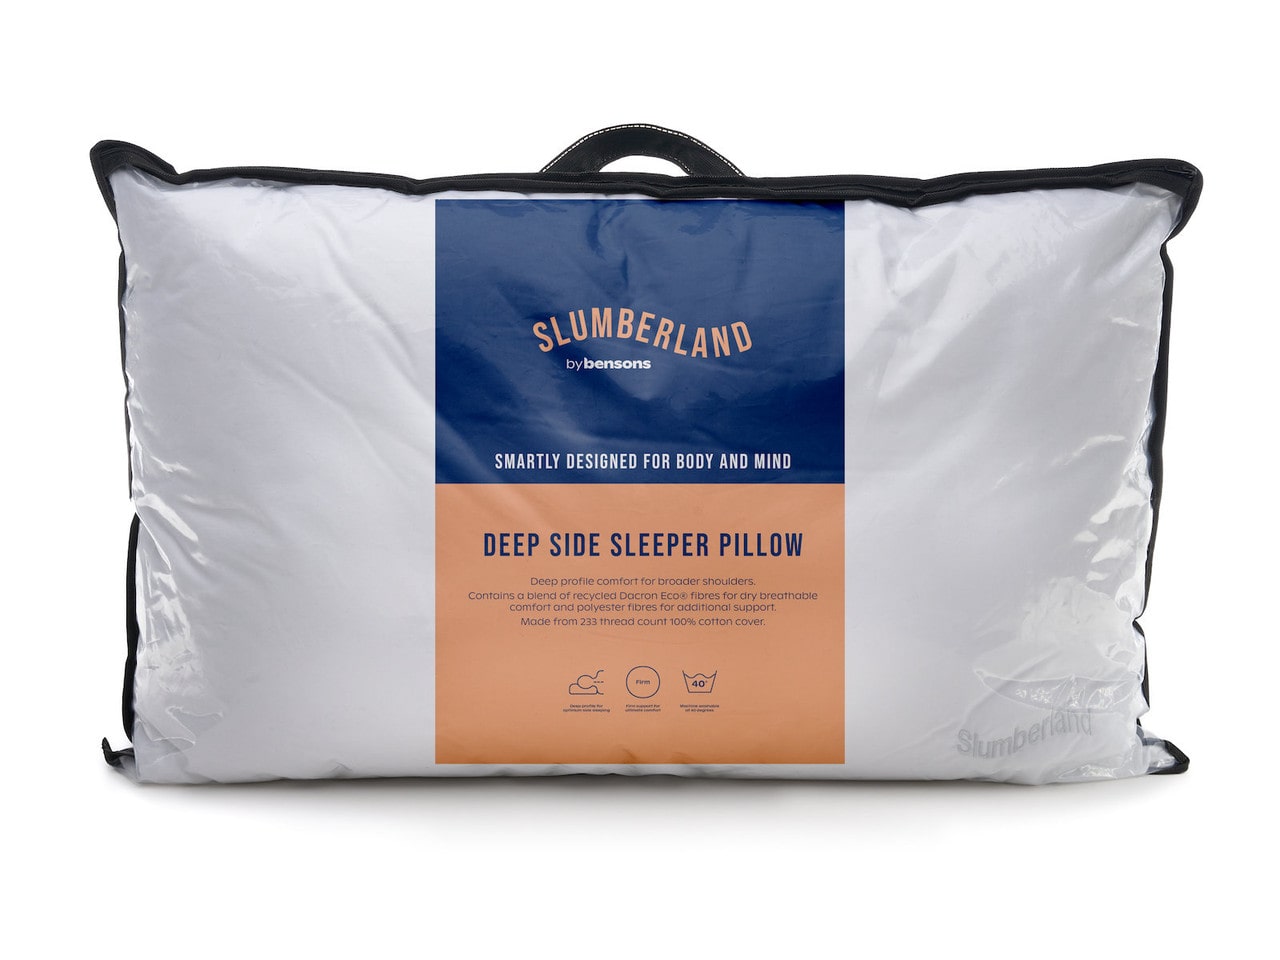 Slumberland by Bensons Deep Side Sleeper Pillow